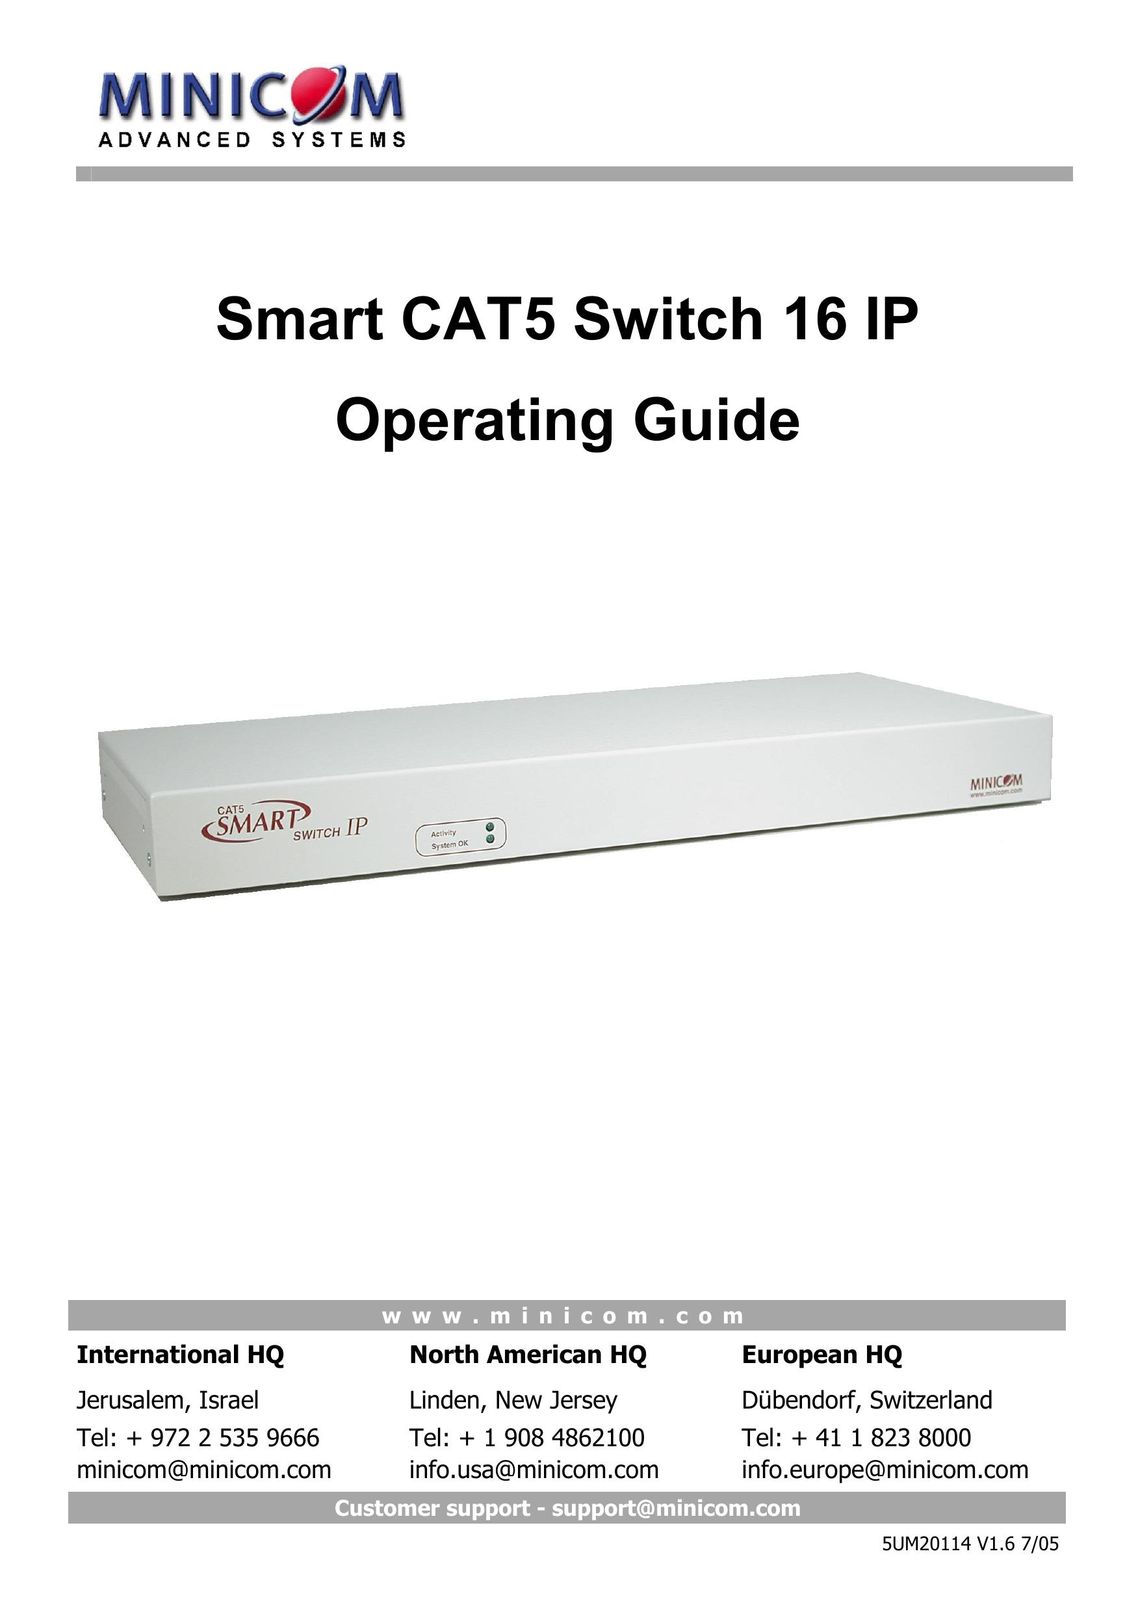 Minicom Advanced Systems 5UM20114 Switch User Manual